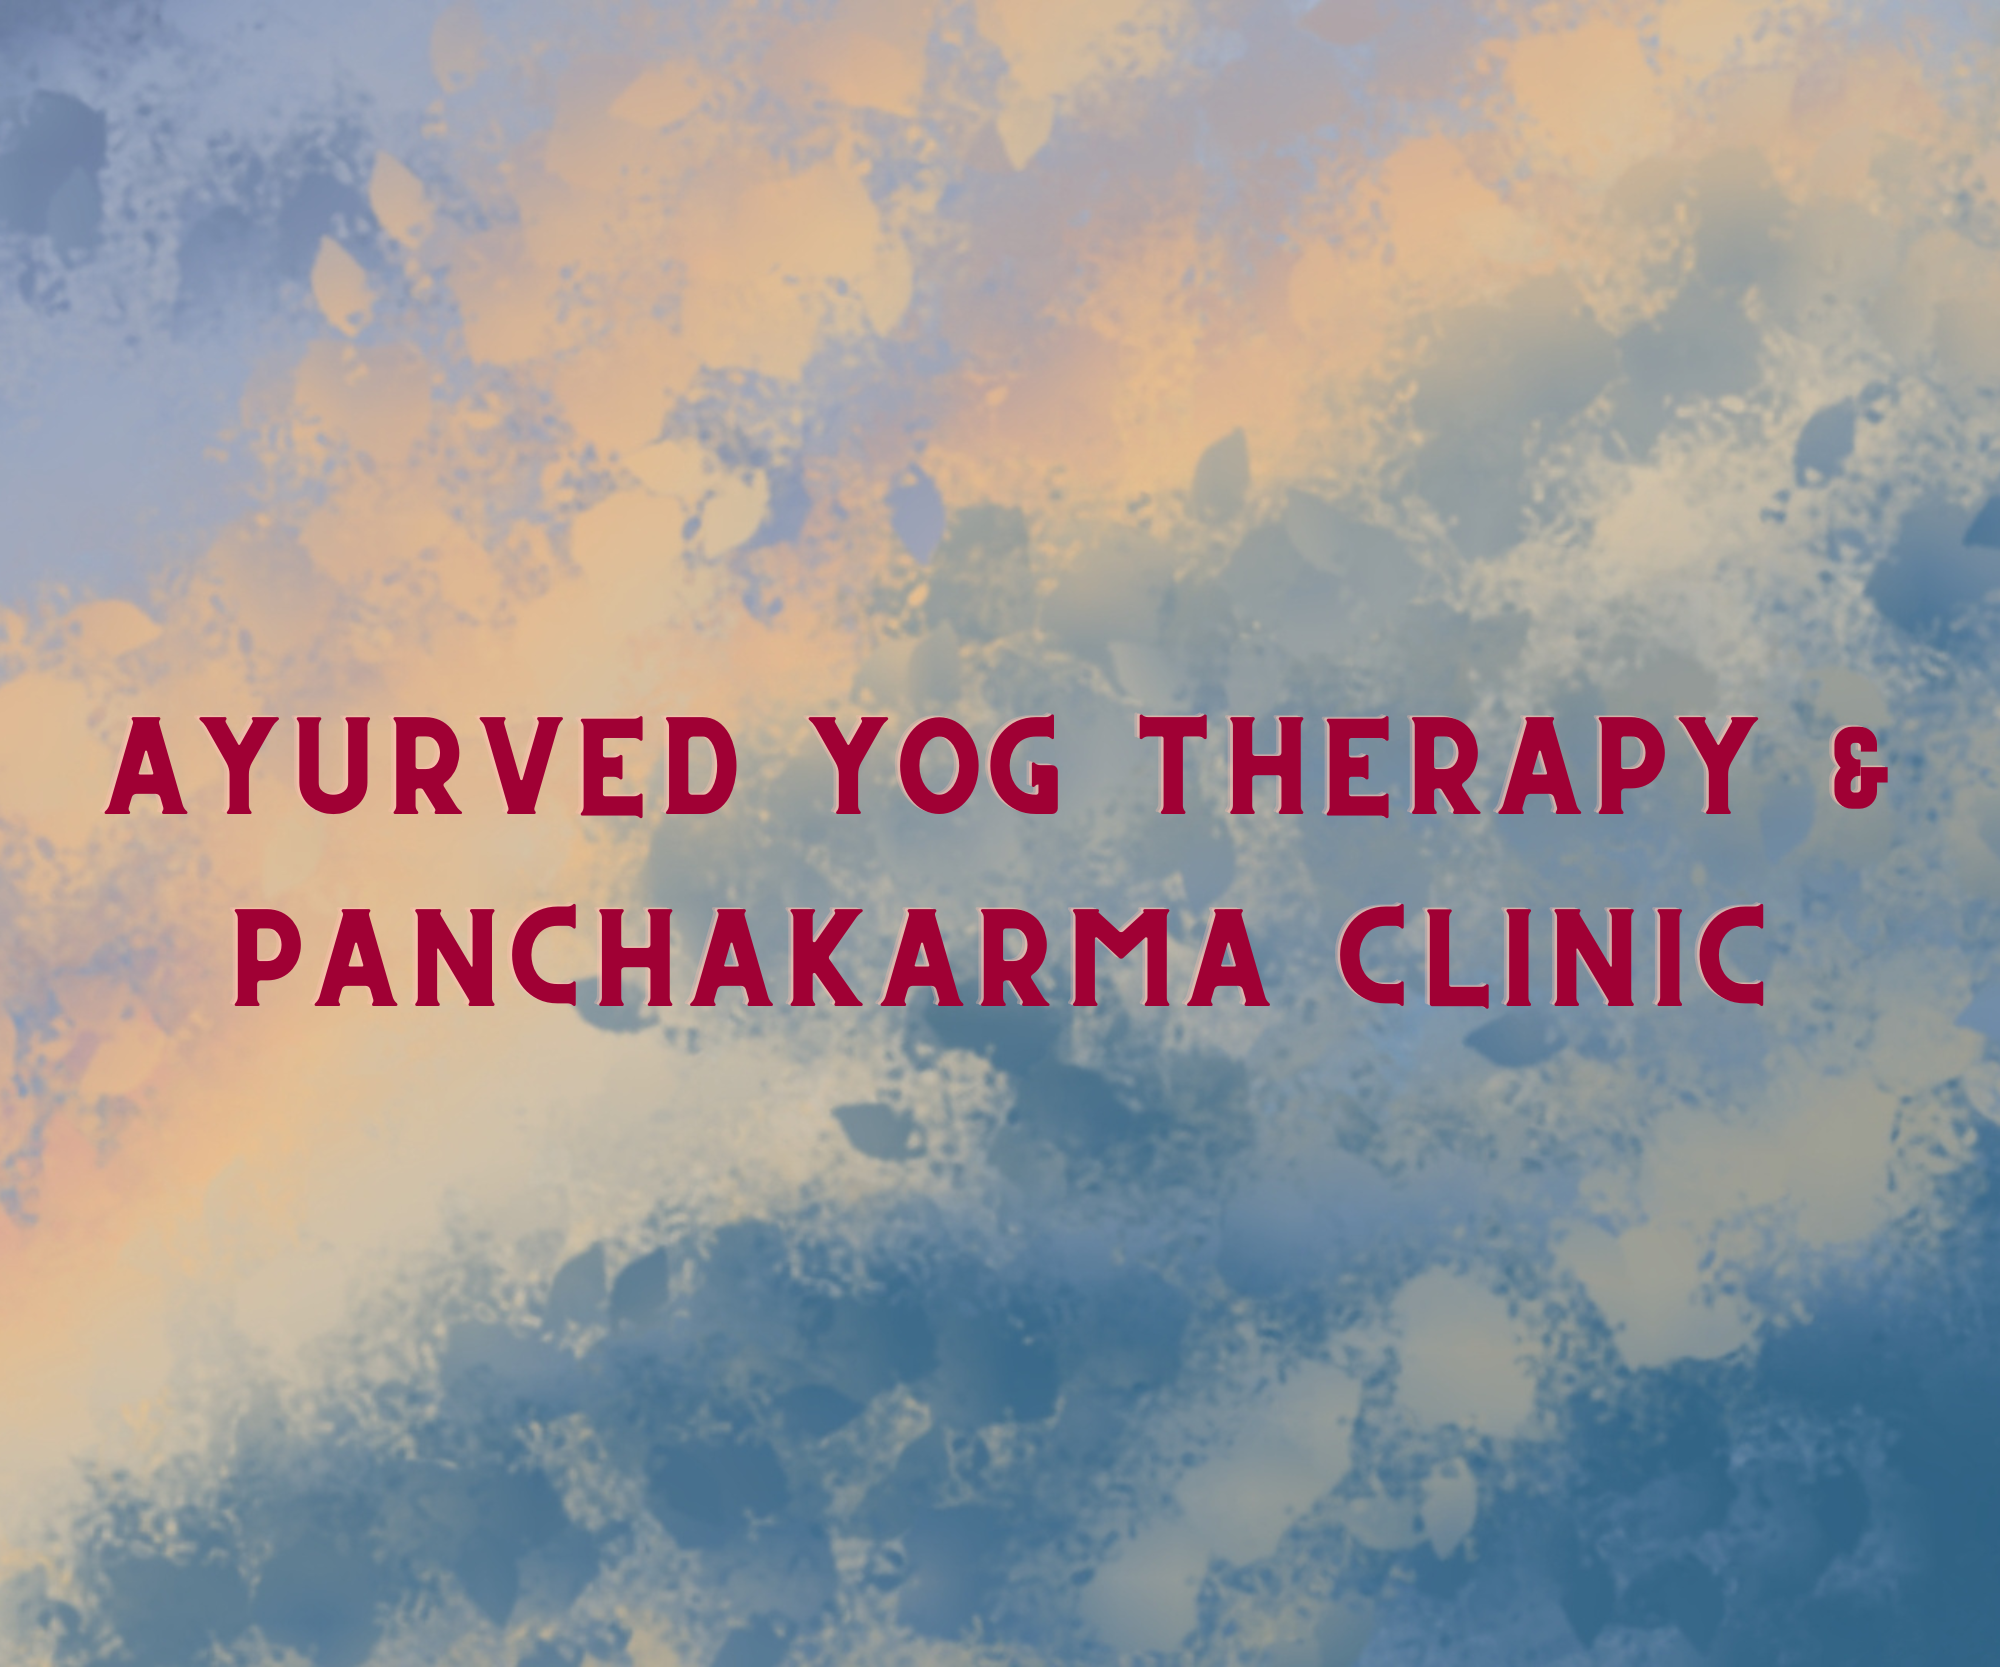 Ayurved Yog Therapy & Panchakarma Clinic, Market Yard Road, Gultekdi, Pune | Water Based and Industrial Paint Manufacturer 